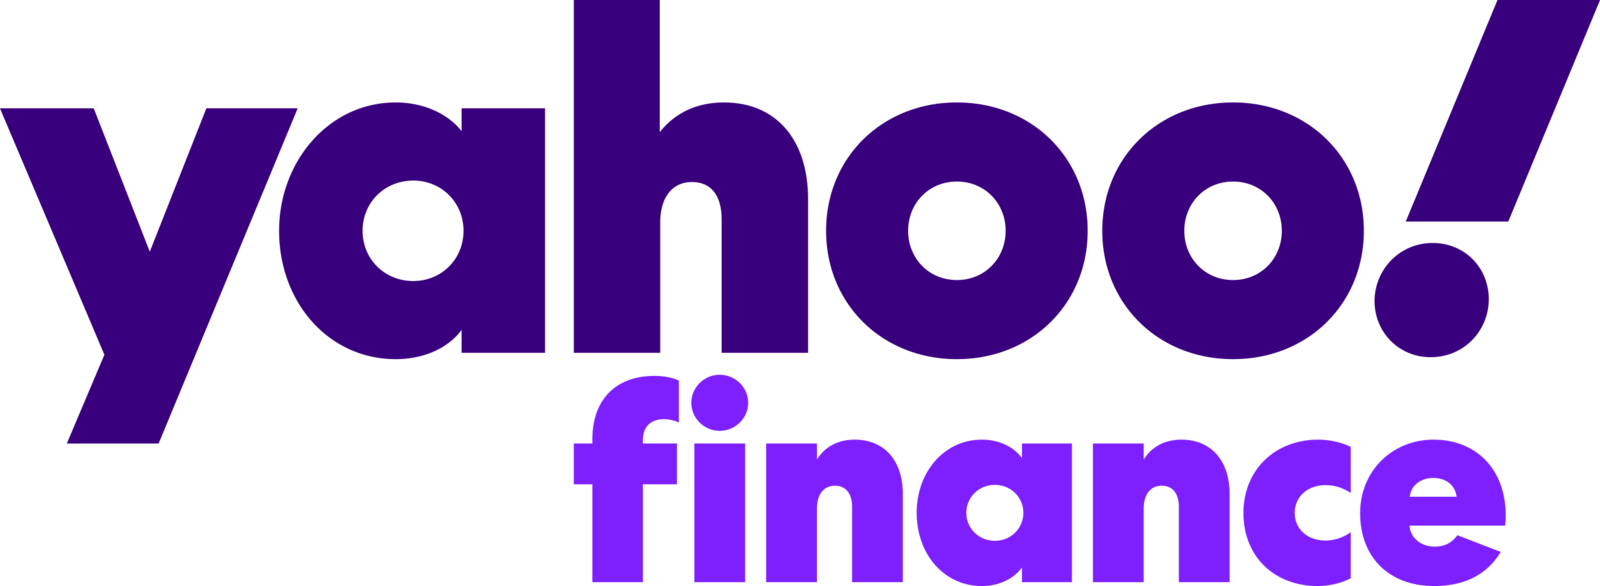 Matthew Benson Sonmore Financial featured in Yahoo Finance